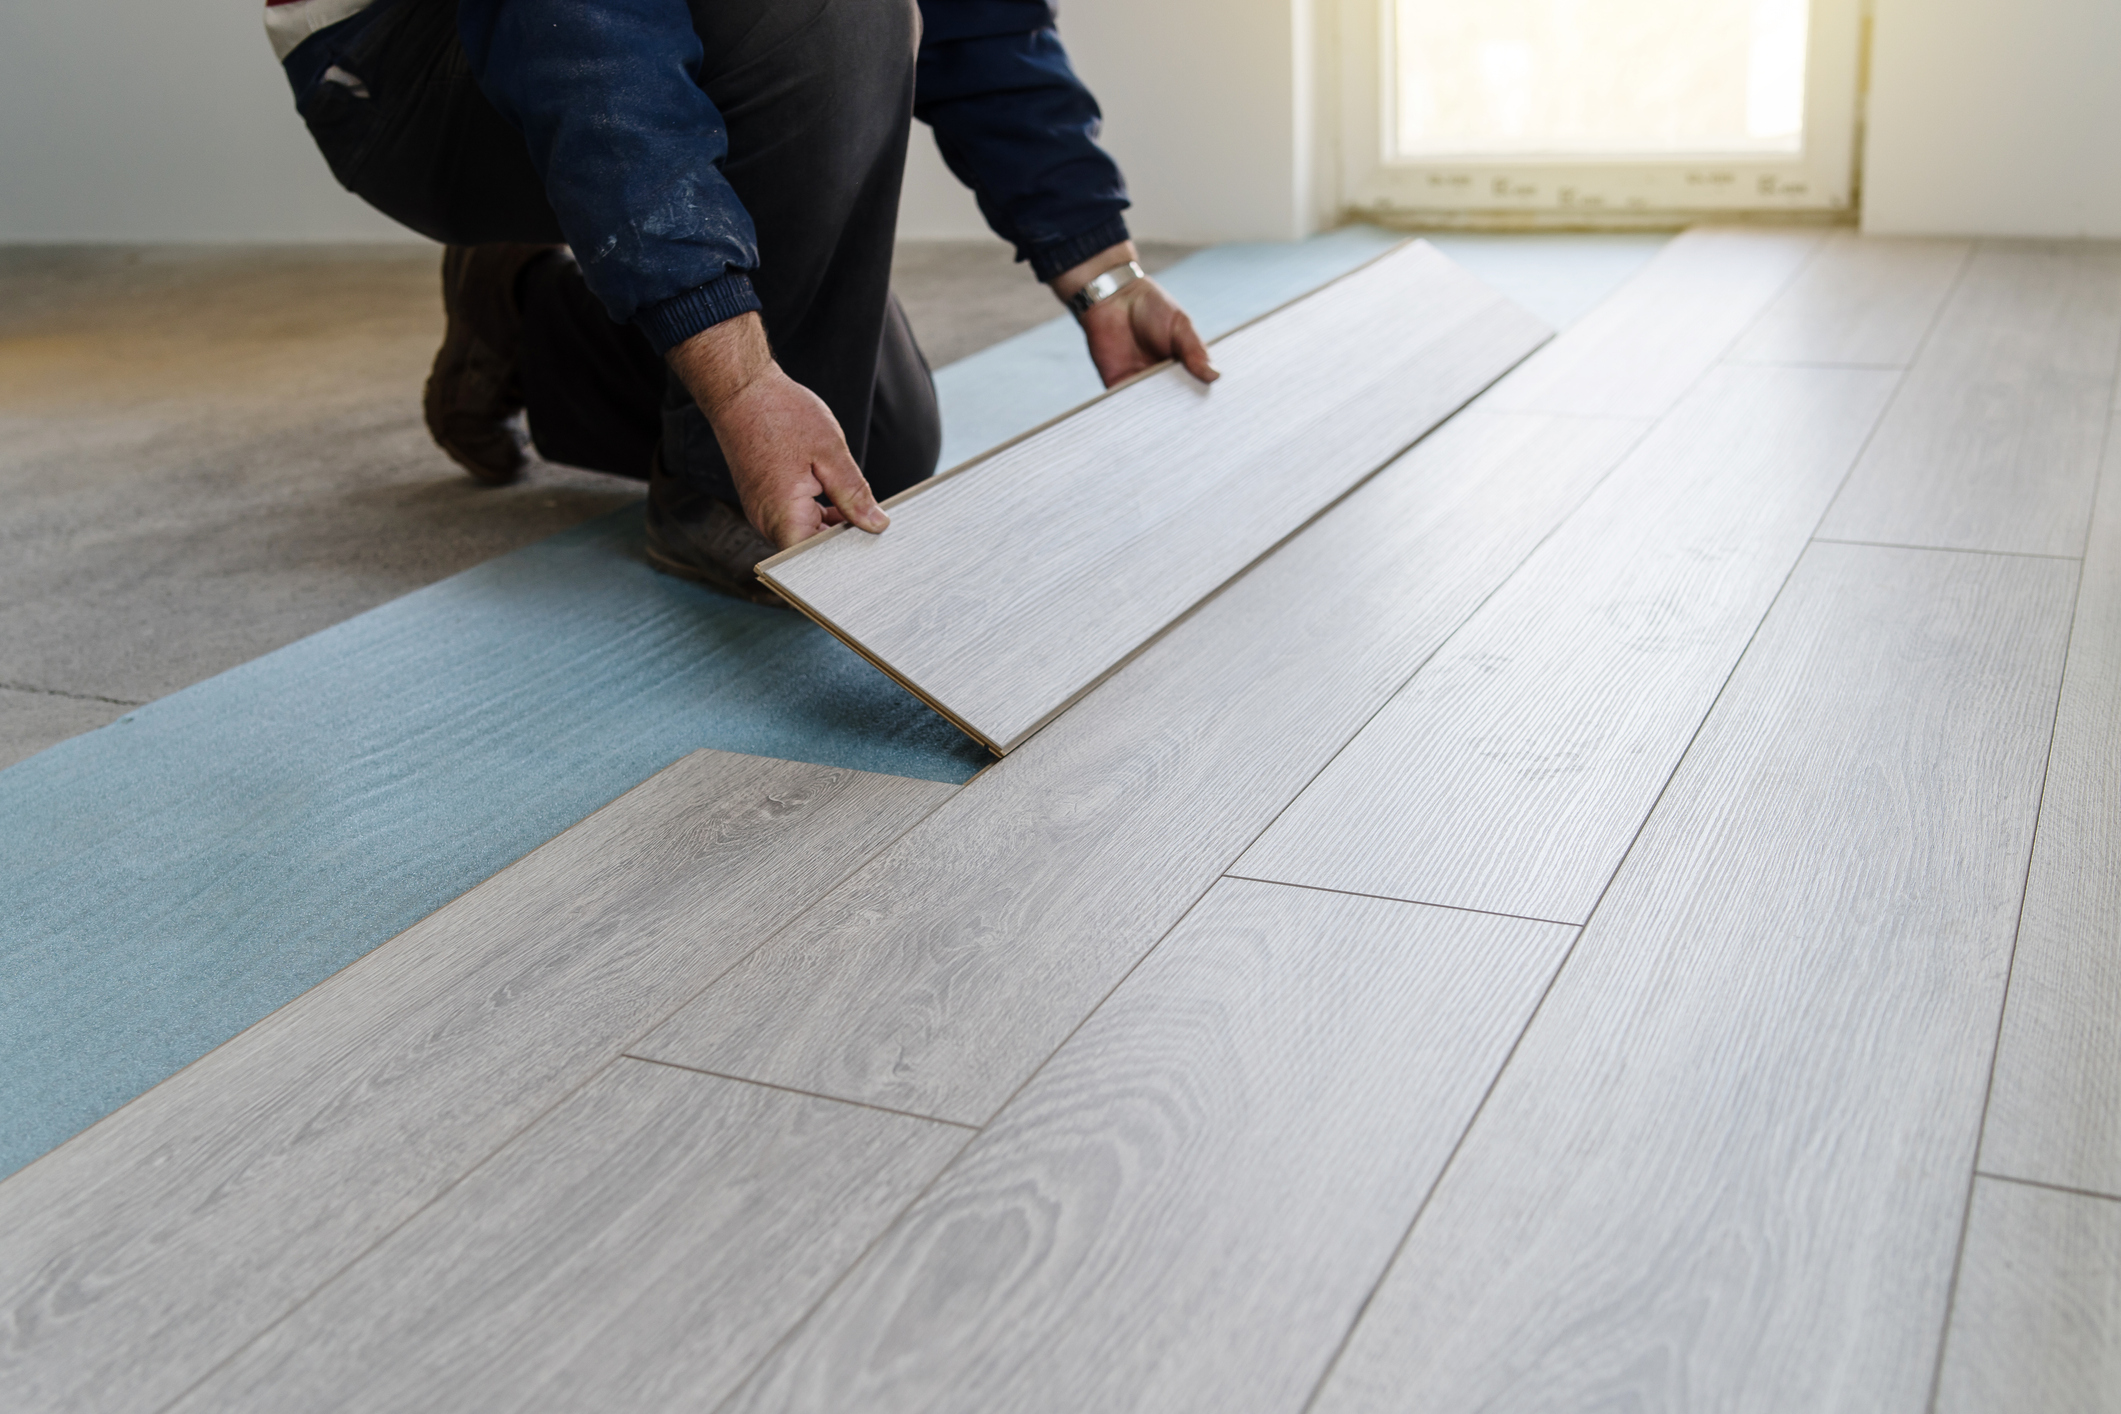 Temporary Flooring Ideas, Can You Put Laminate Flooring Over Glued Down Carpet